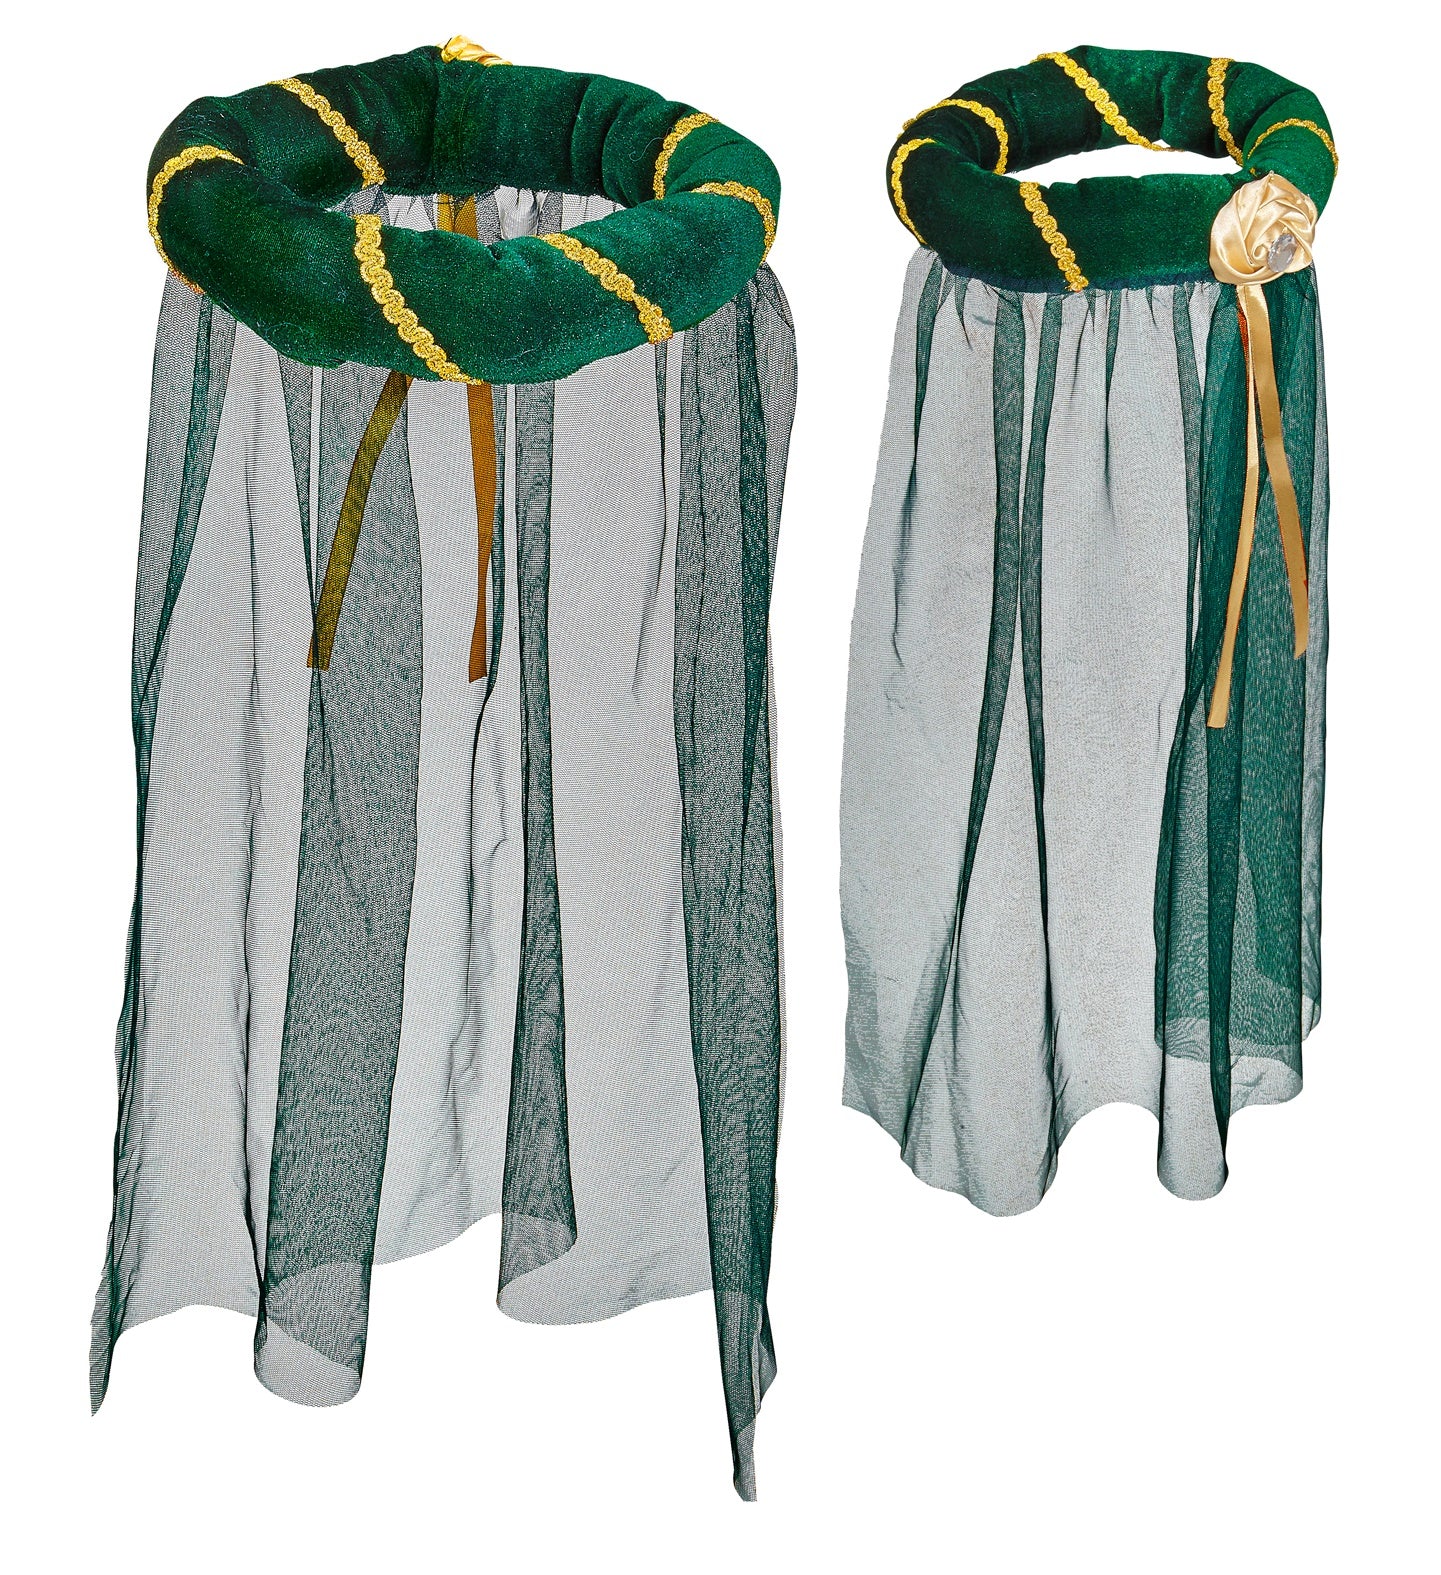 Green Medieval Headdress with Veil